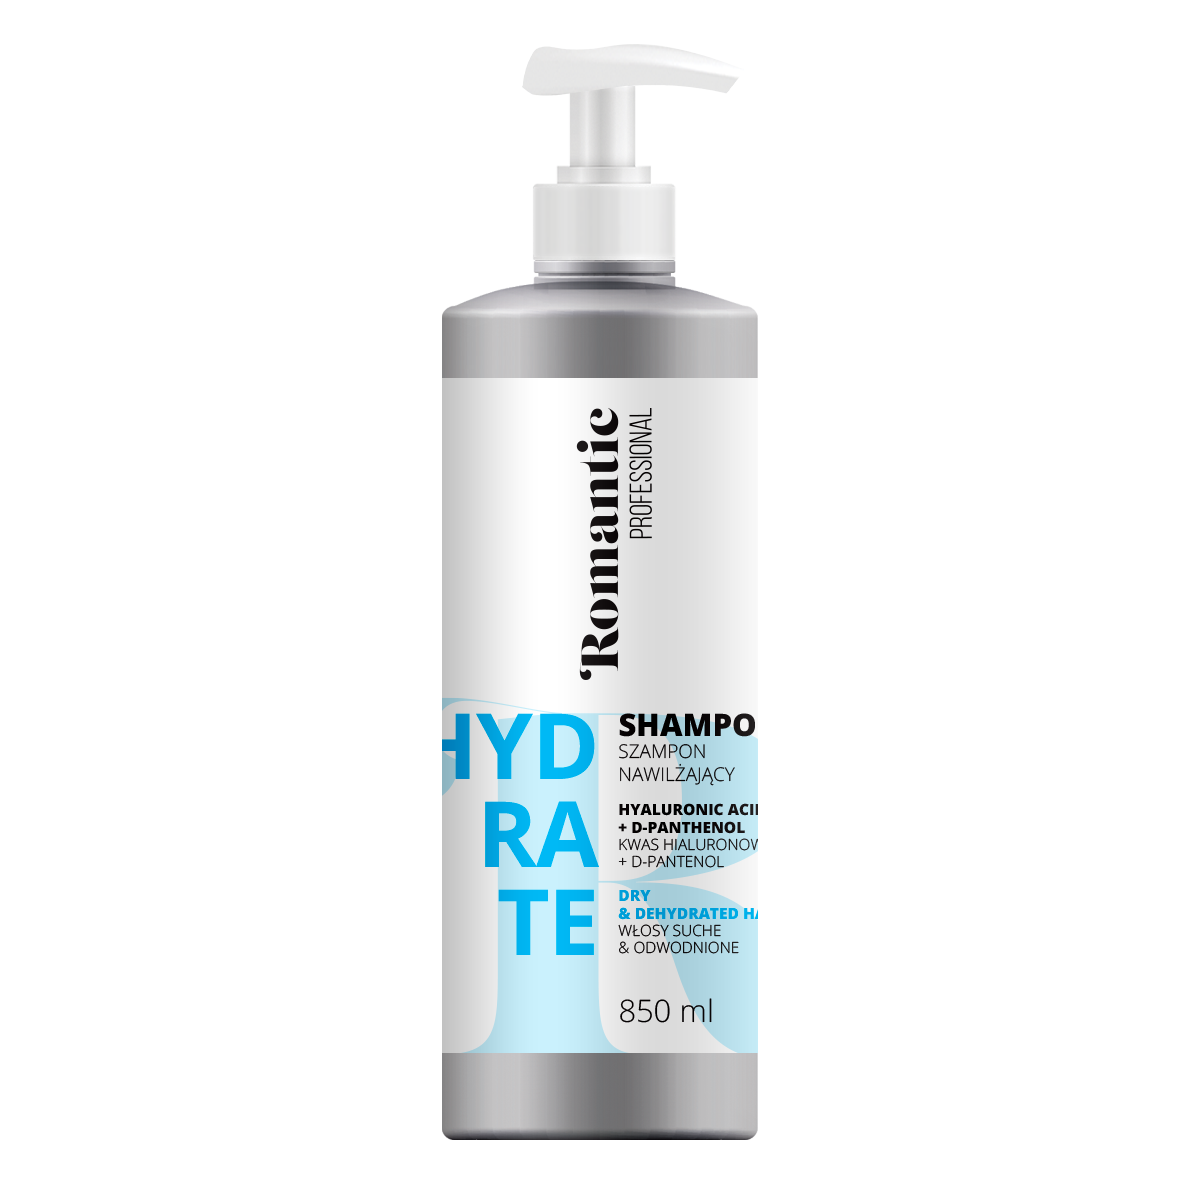 Romantic Hydrate Shampoo 850ml